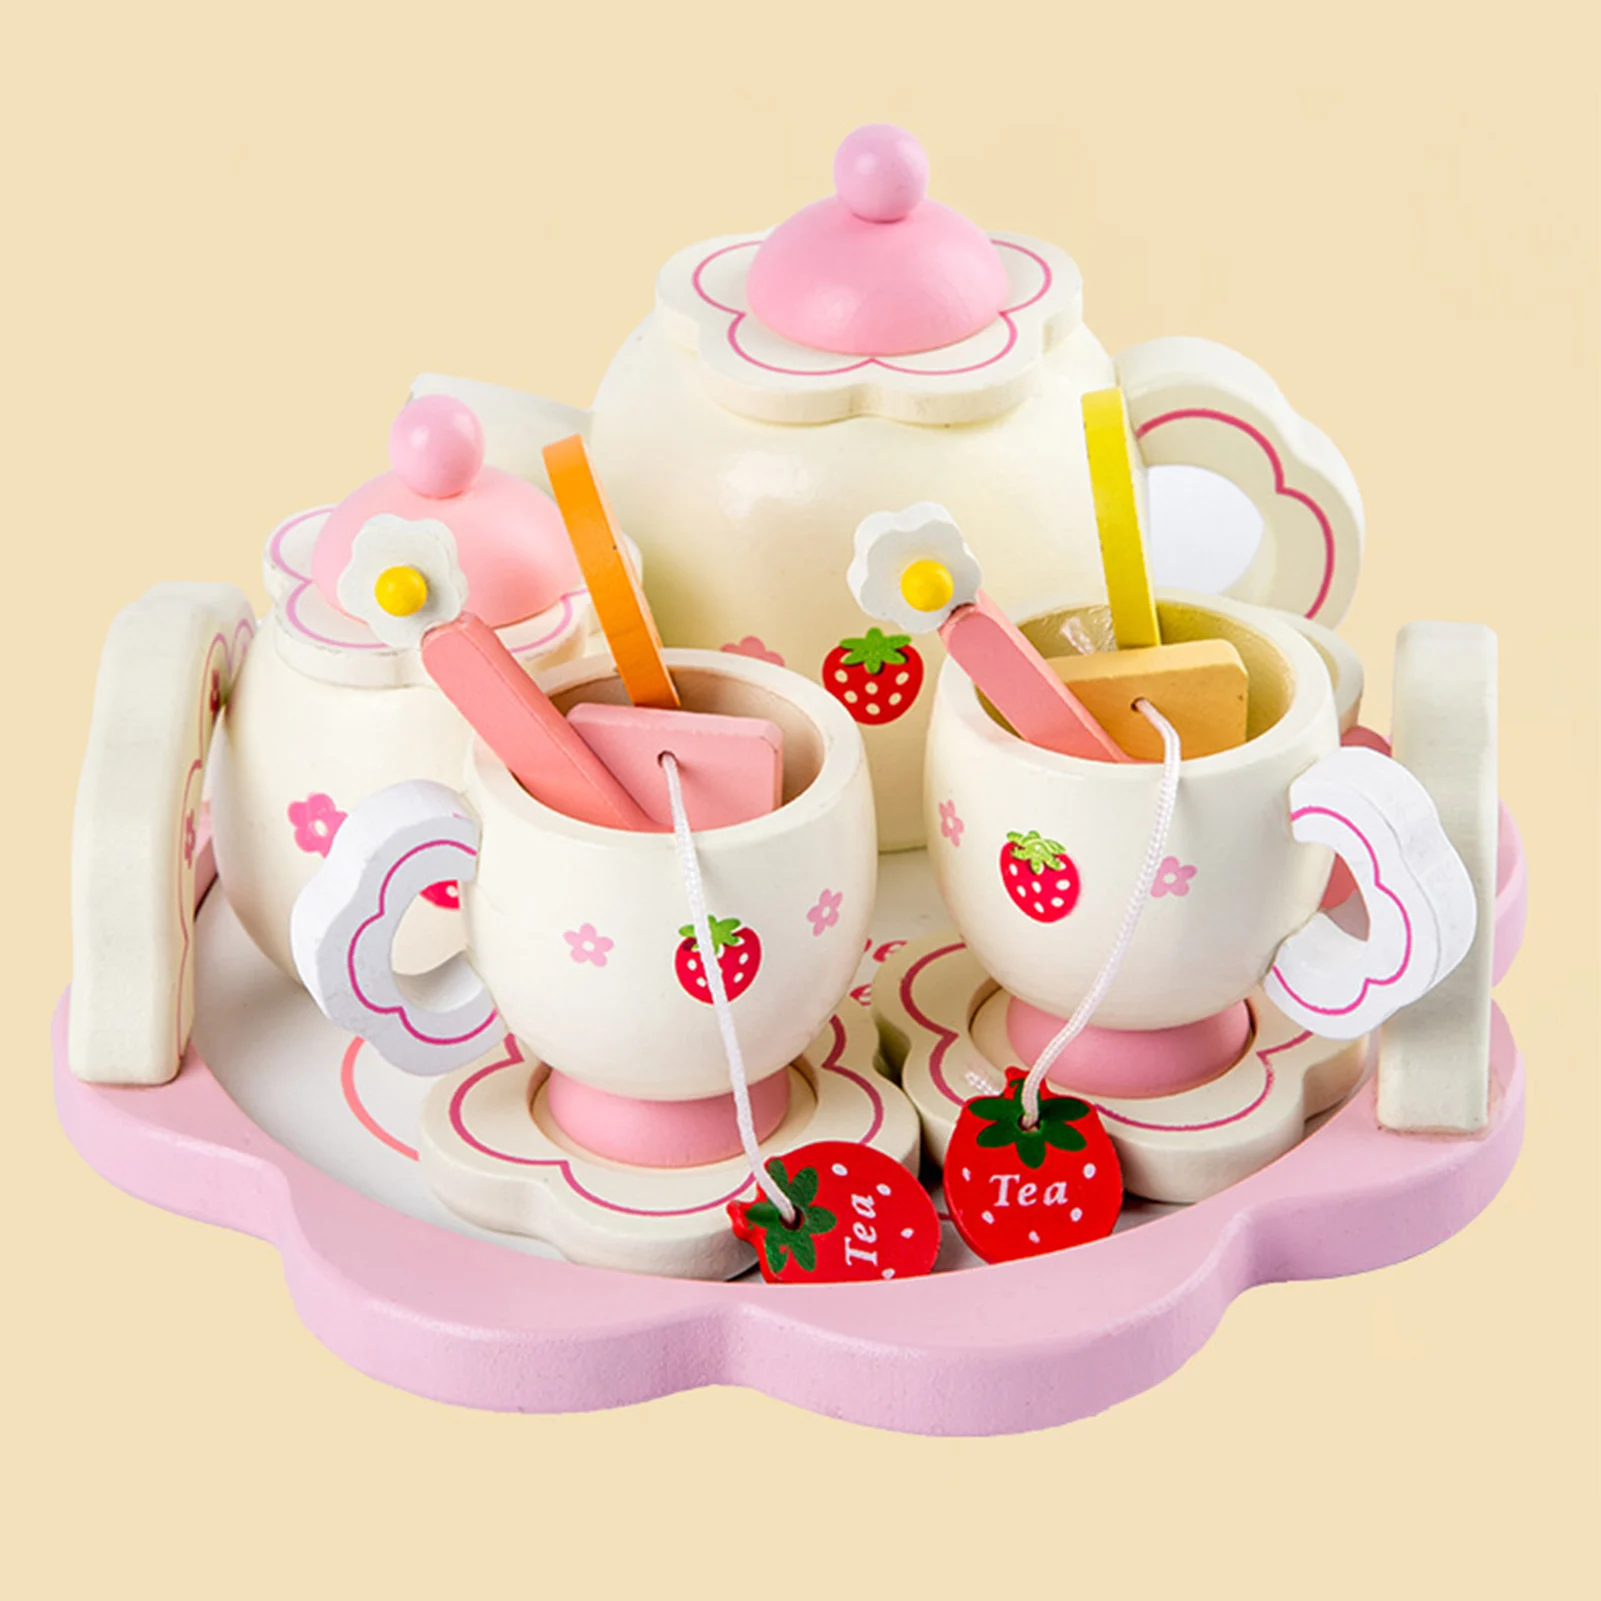 wooden-simulation-teacup-set-children-afternoon-tea-kitchenware-pretend-play-kids-tea-toy-set-educational-gifts-for-children